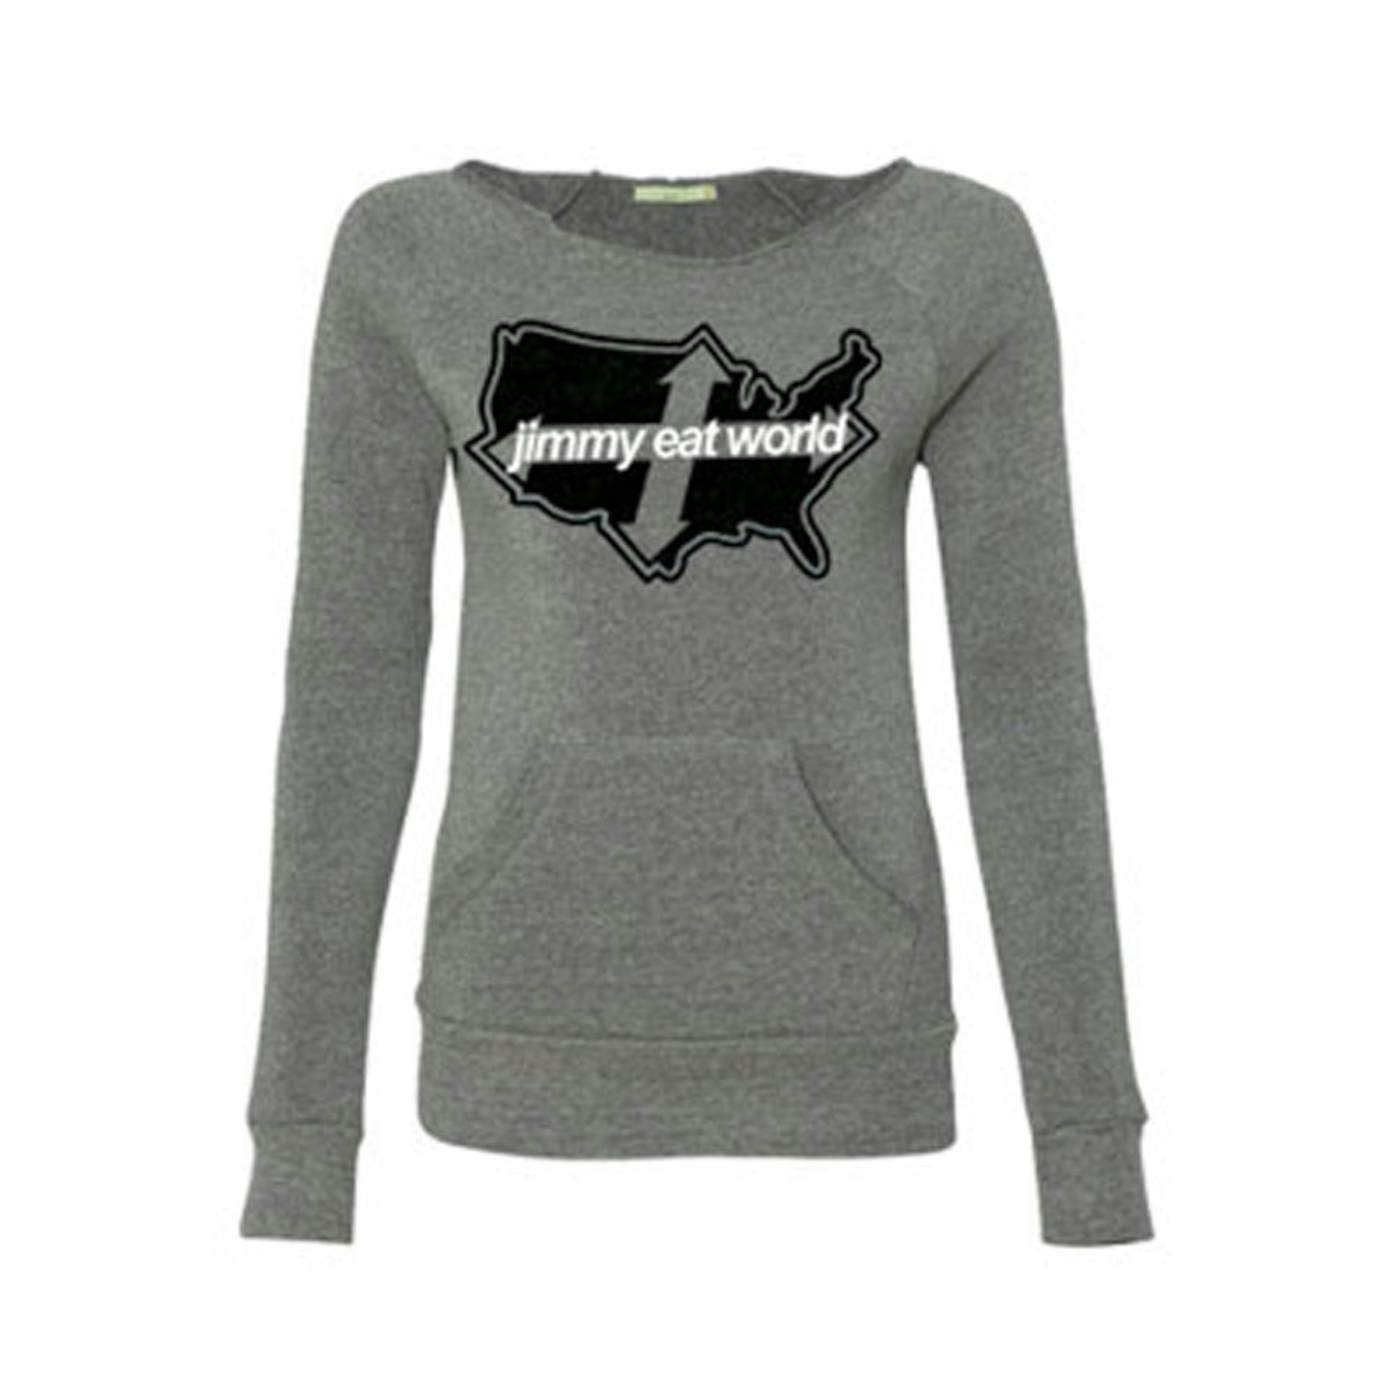 Jimmy Eat World Across America Womens Sweatshirt (Gray)